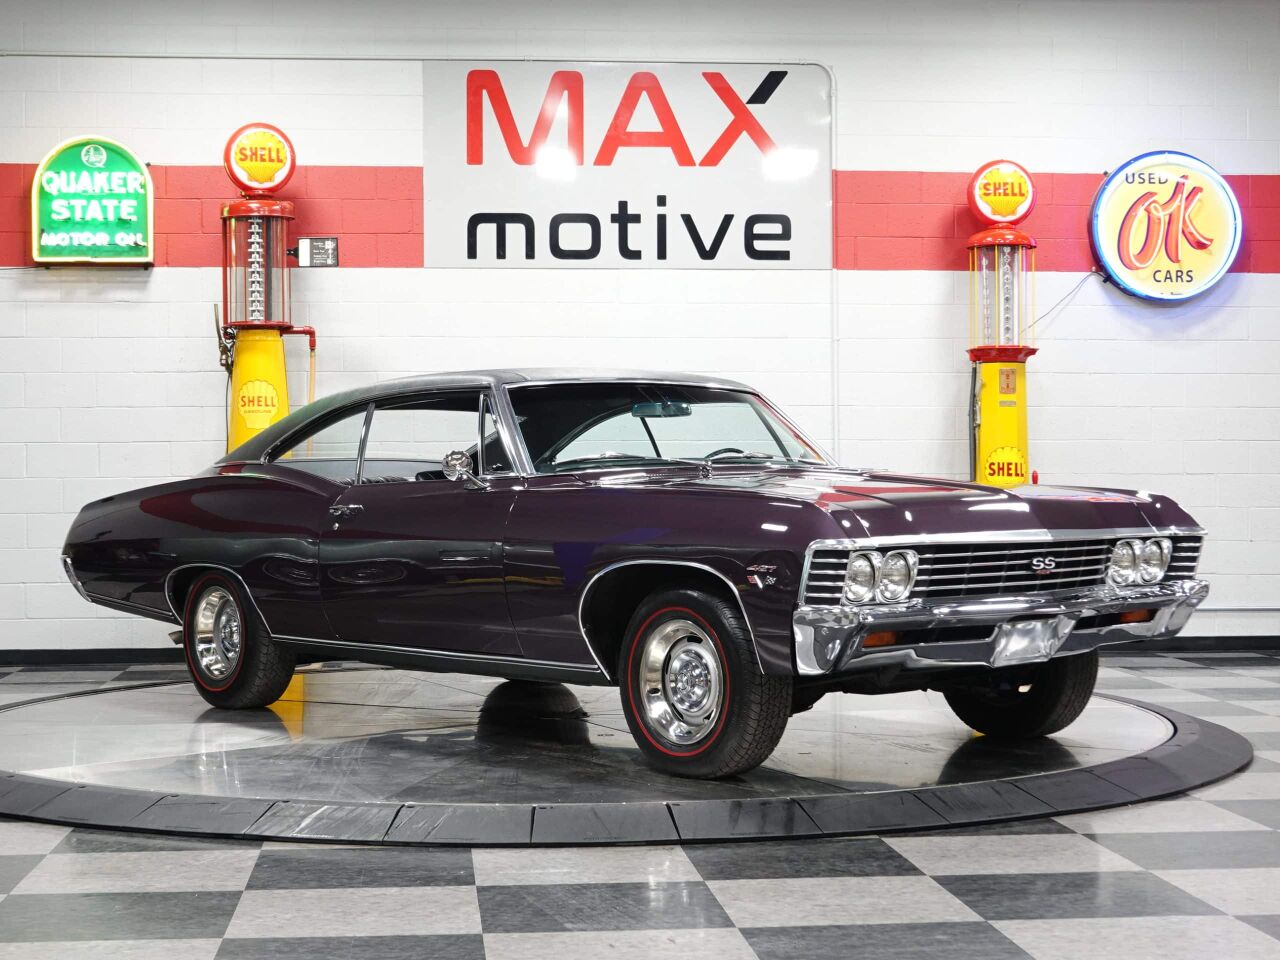 1967 Chevrolet Impala For Sale - Carsforsale.com®